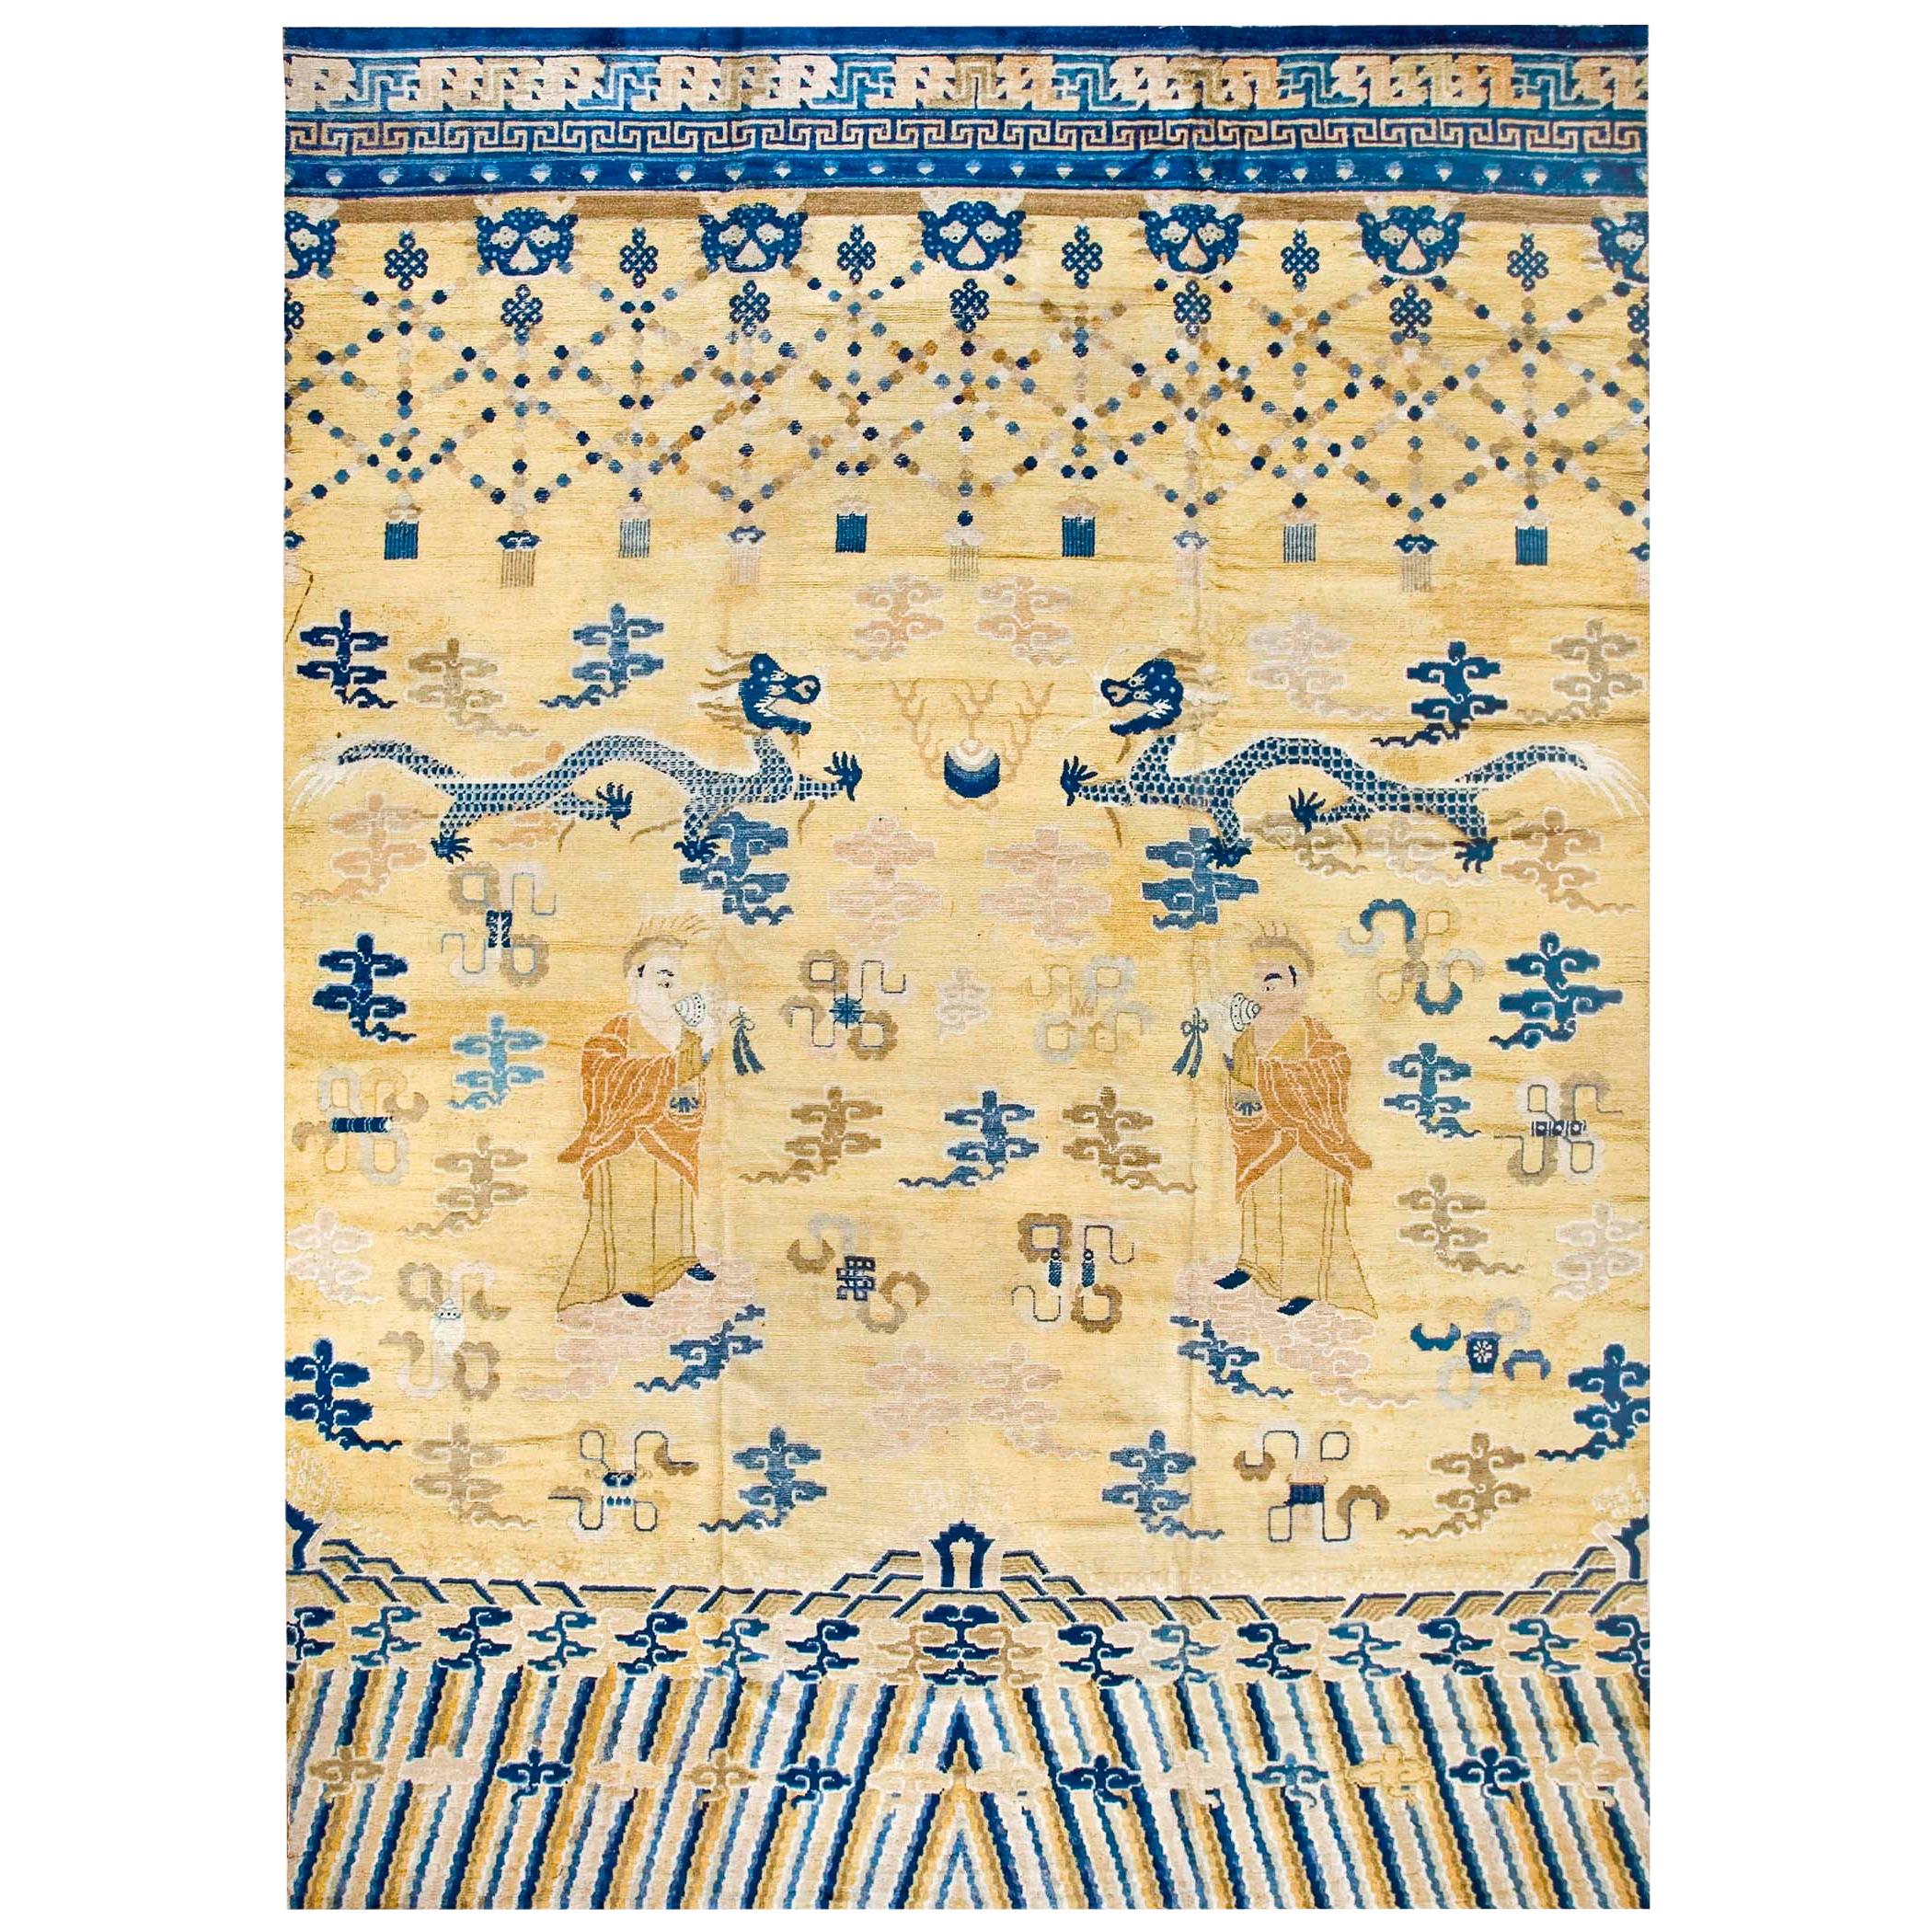 Early 19th Century W. Chinese Ningxia Carpet ( 10'2" x 14'6" - 310 x 442 )